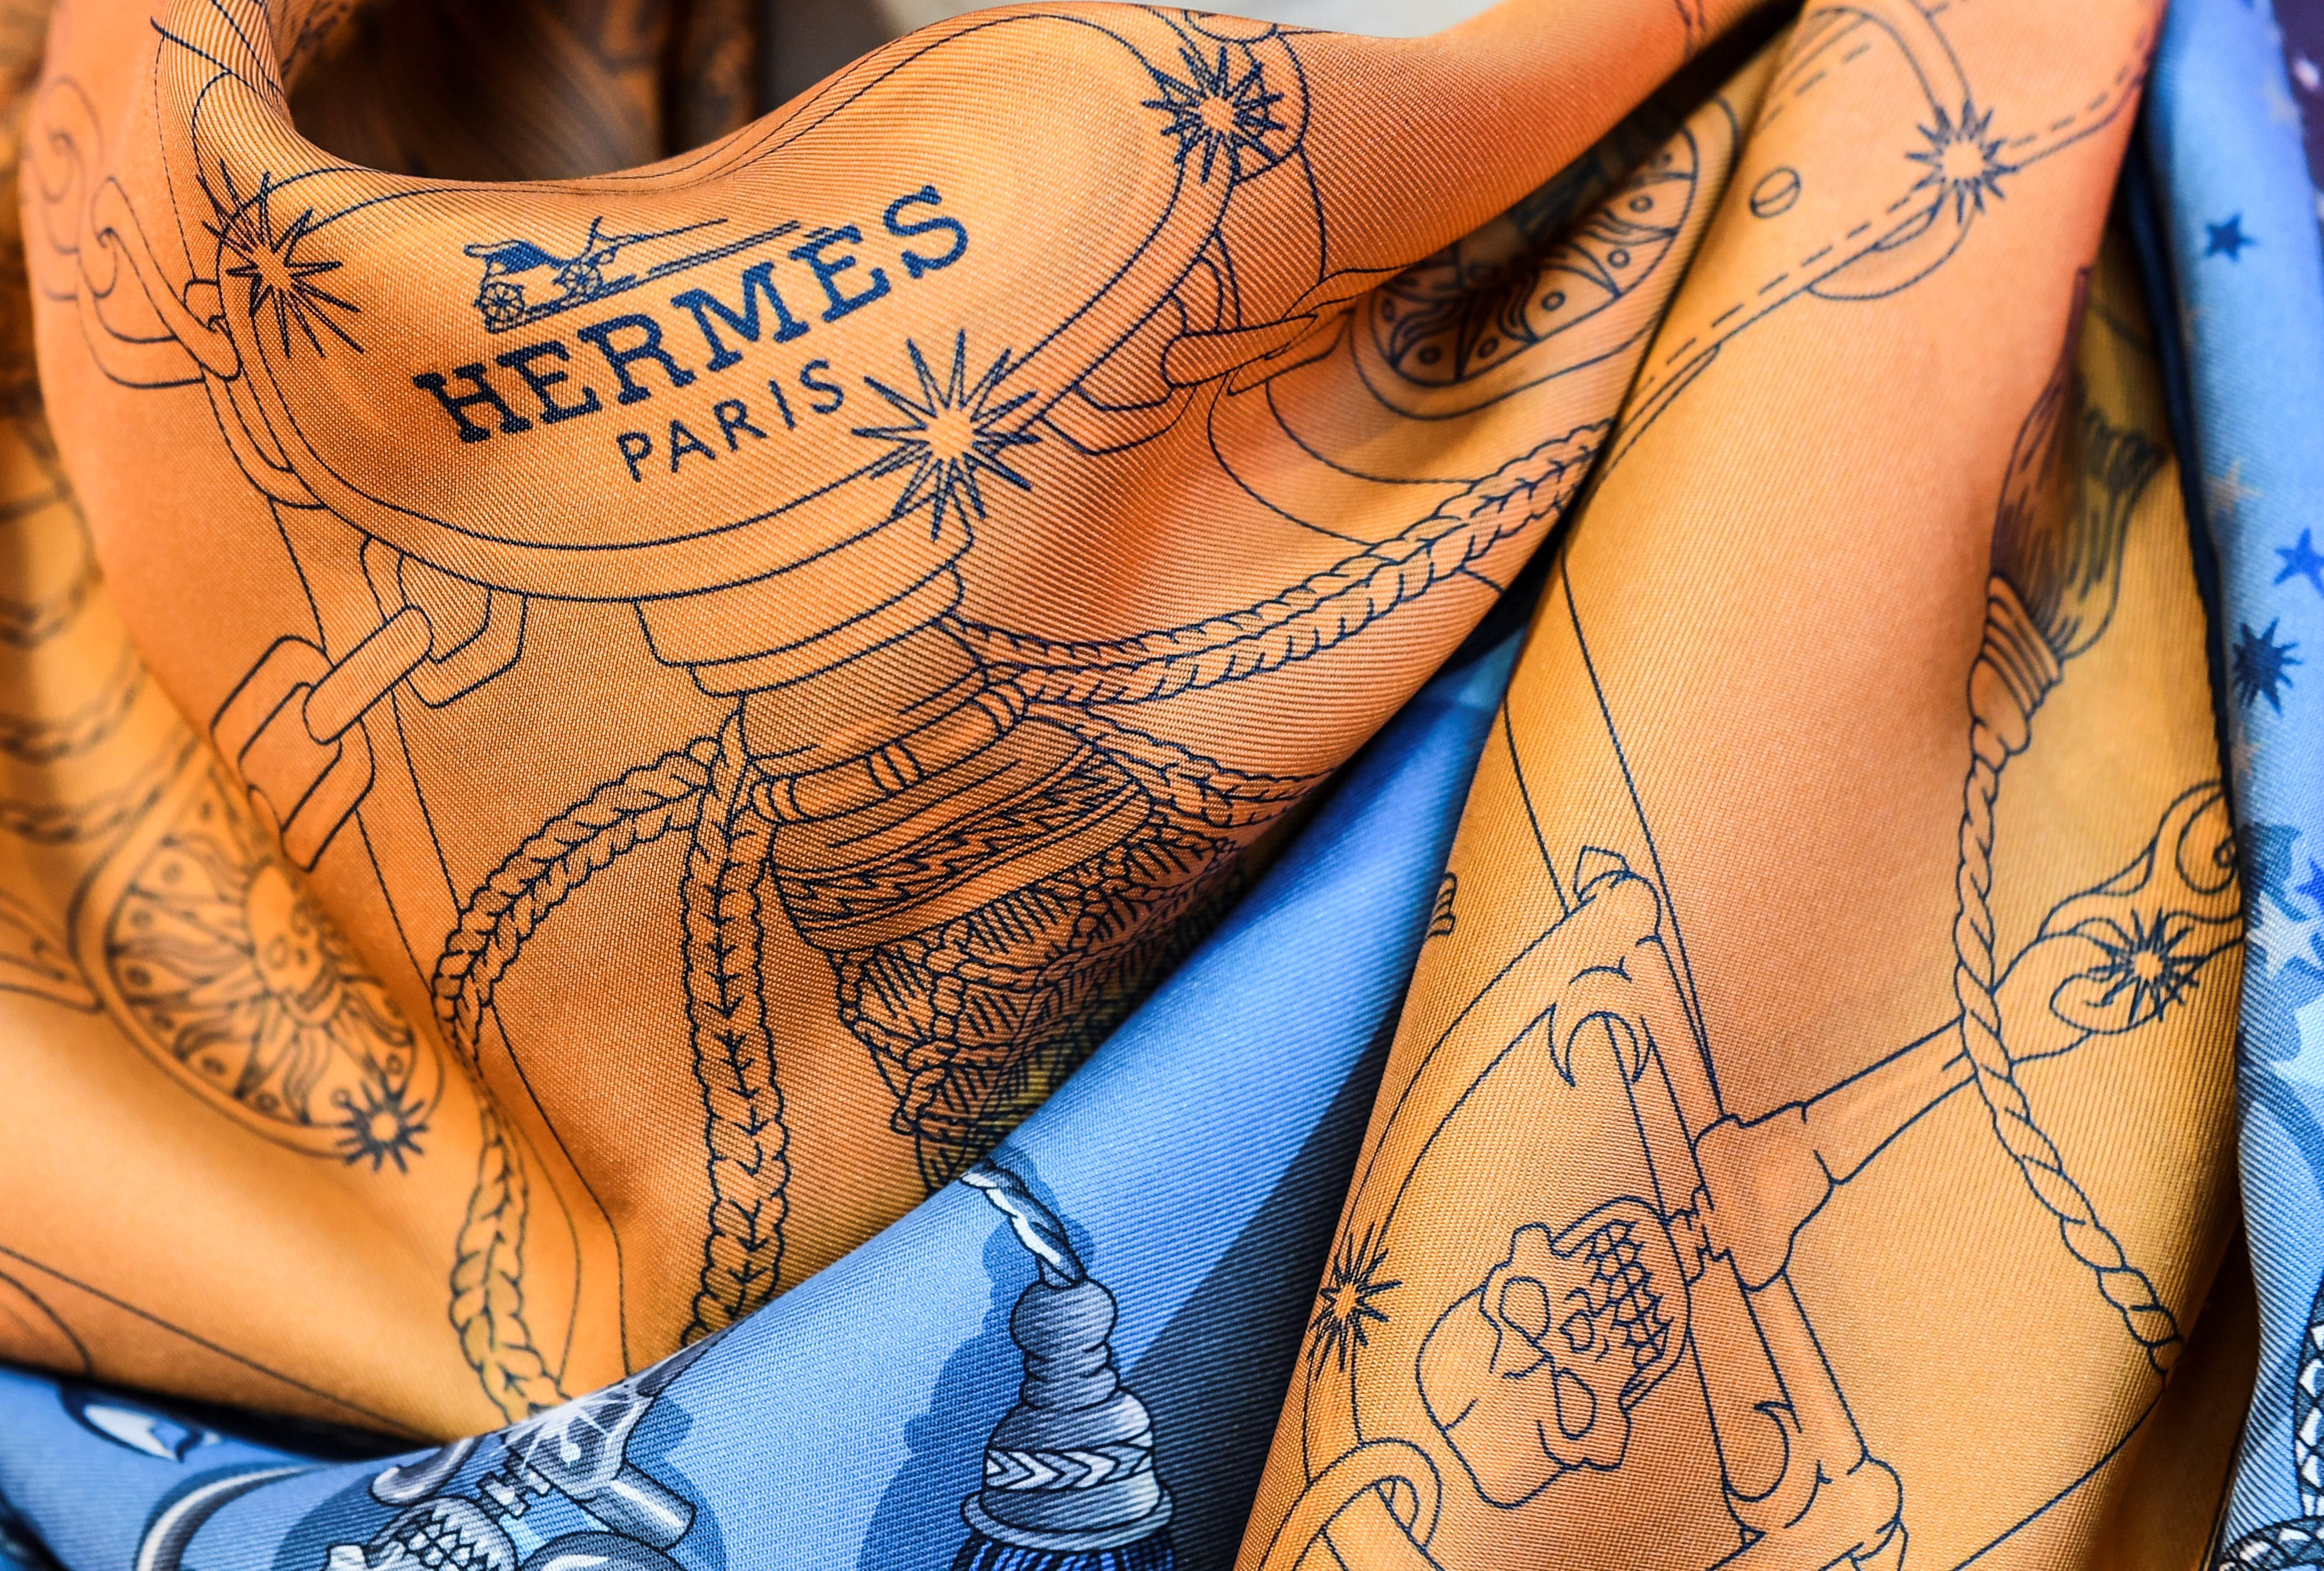 Hermes CEO: No strategy to increase prices despite dim fourth quarter